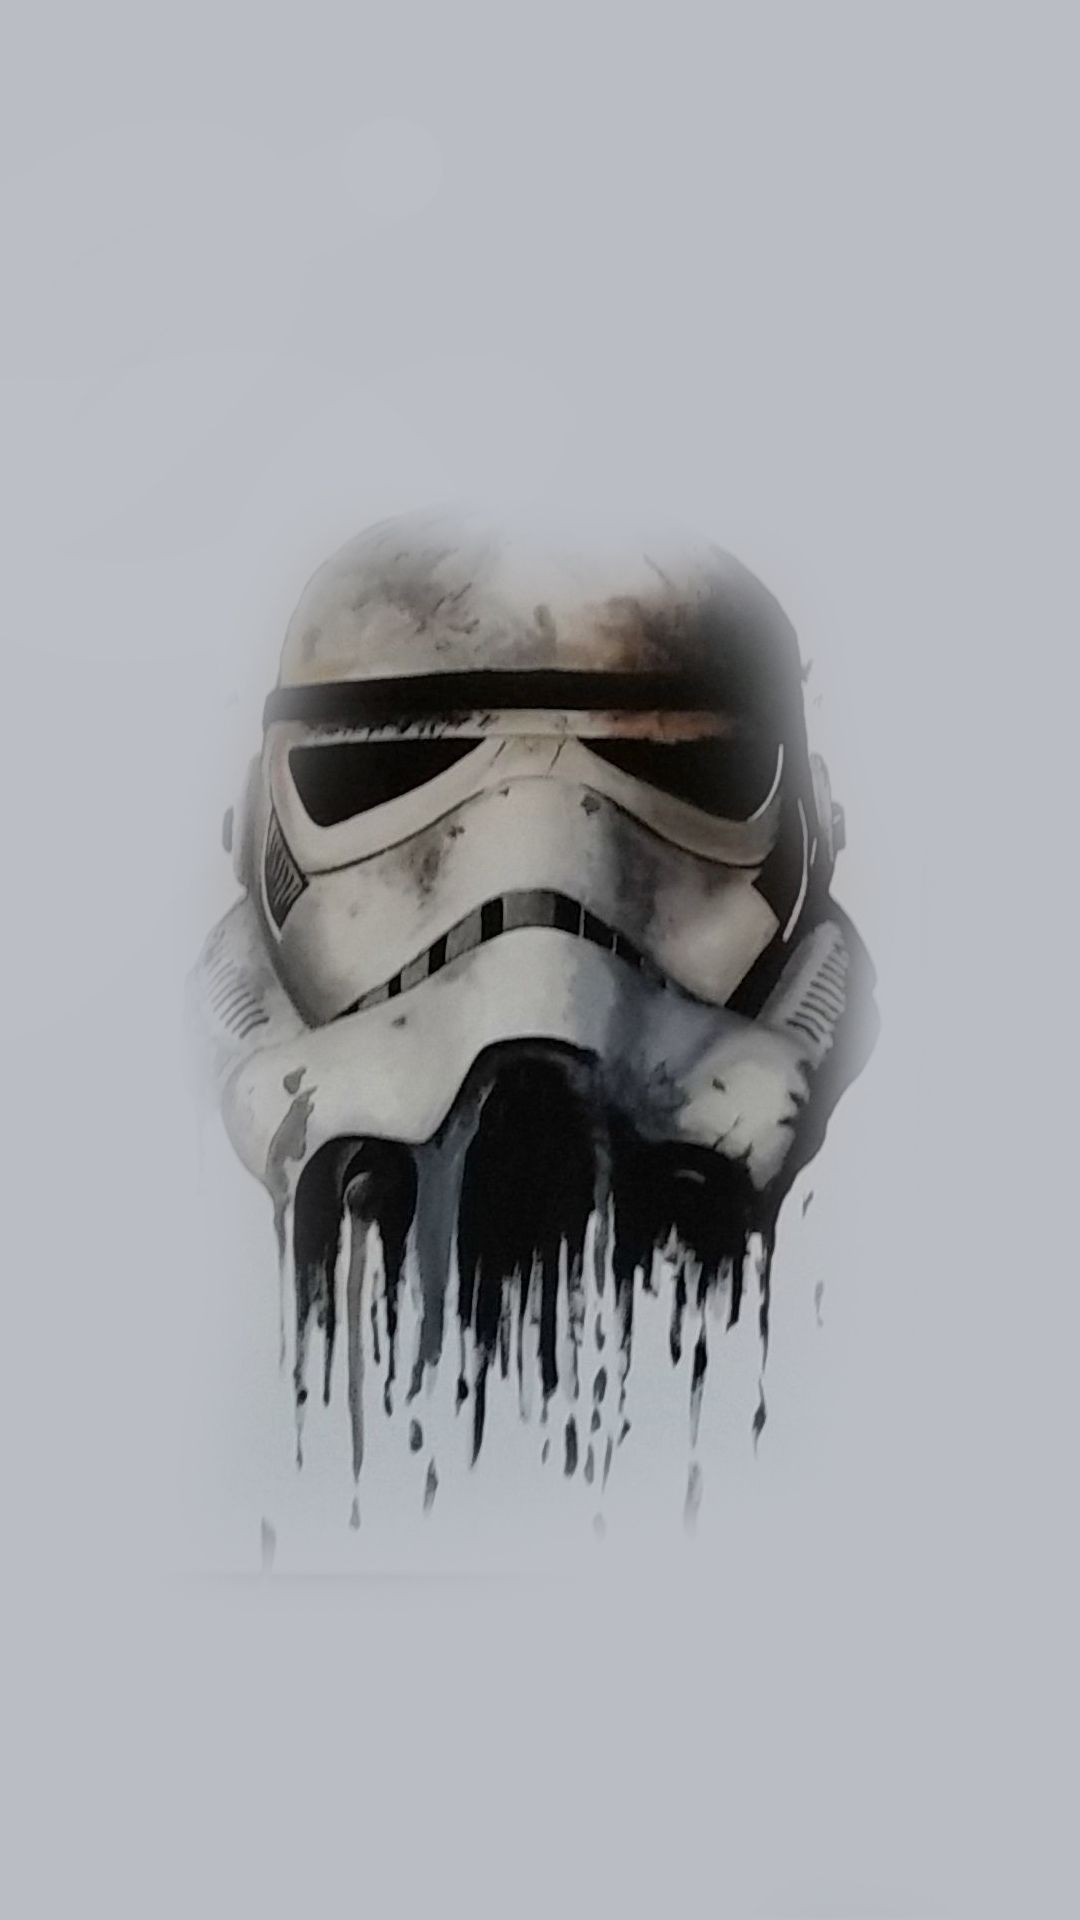 Stormtrooper Helmet Star Wars Wallpapers